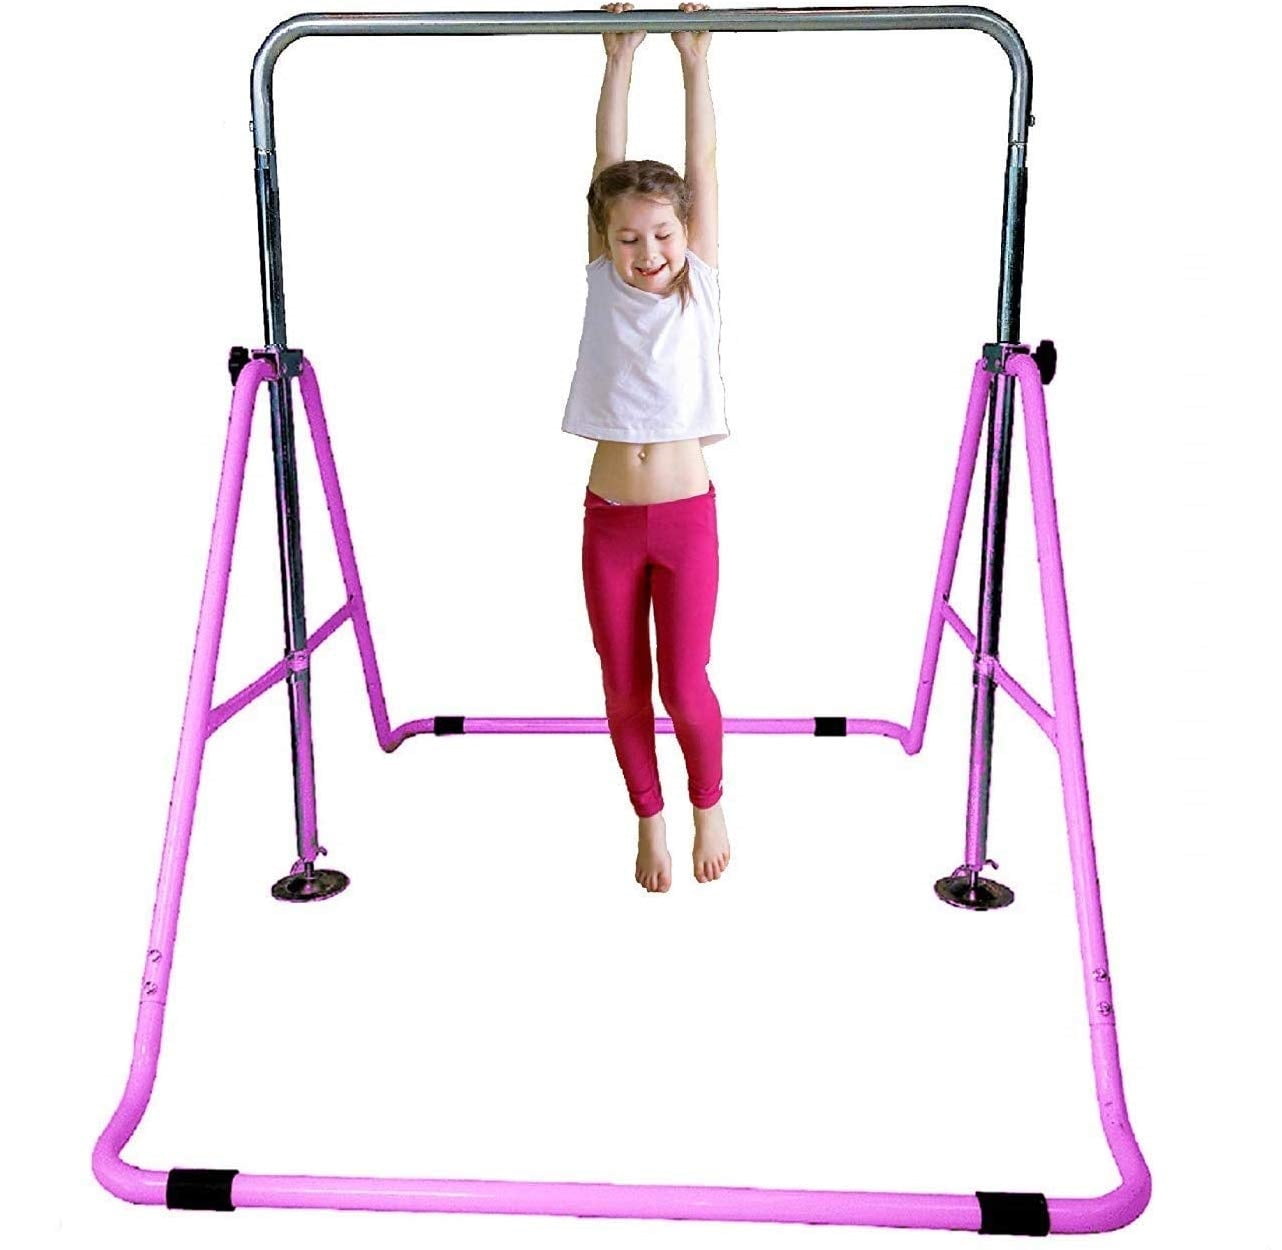 wonline Horizontal Gymnastics Bar Junior Training Bar Height Adjustable 3' to 5' Gym Kip Balance Bar Fitness Equipment for Kids Gymnasts 